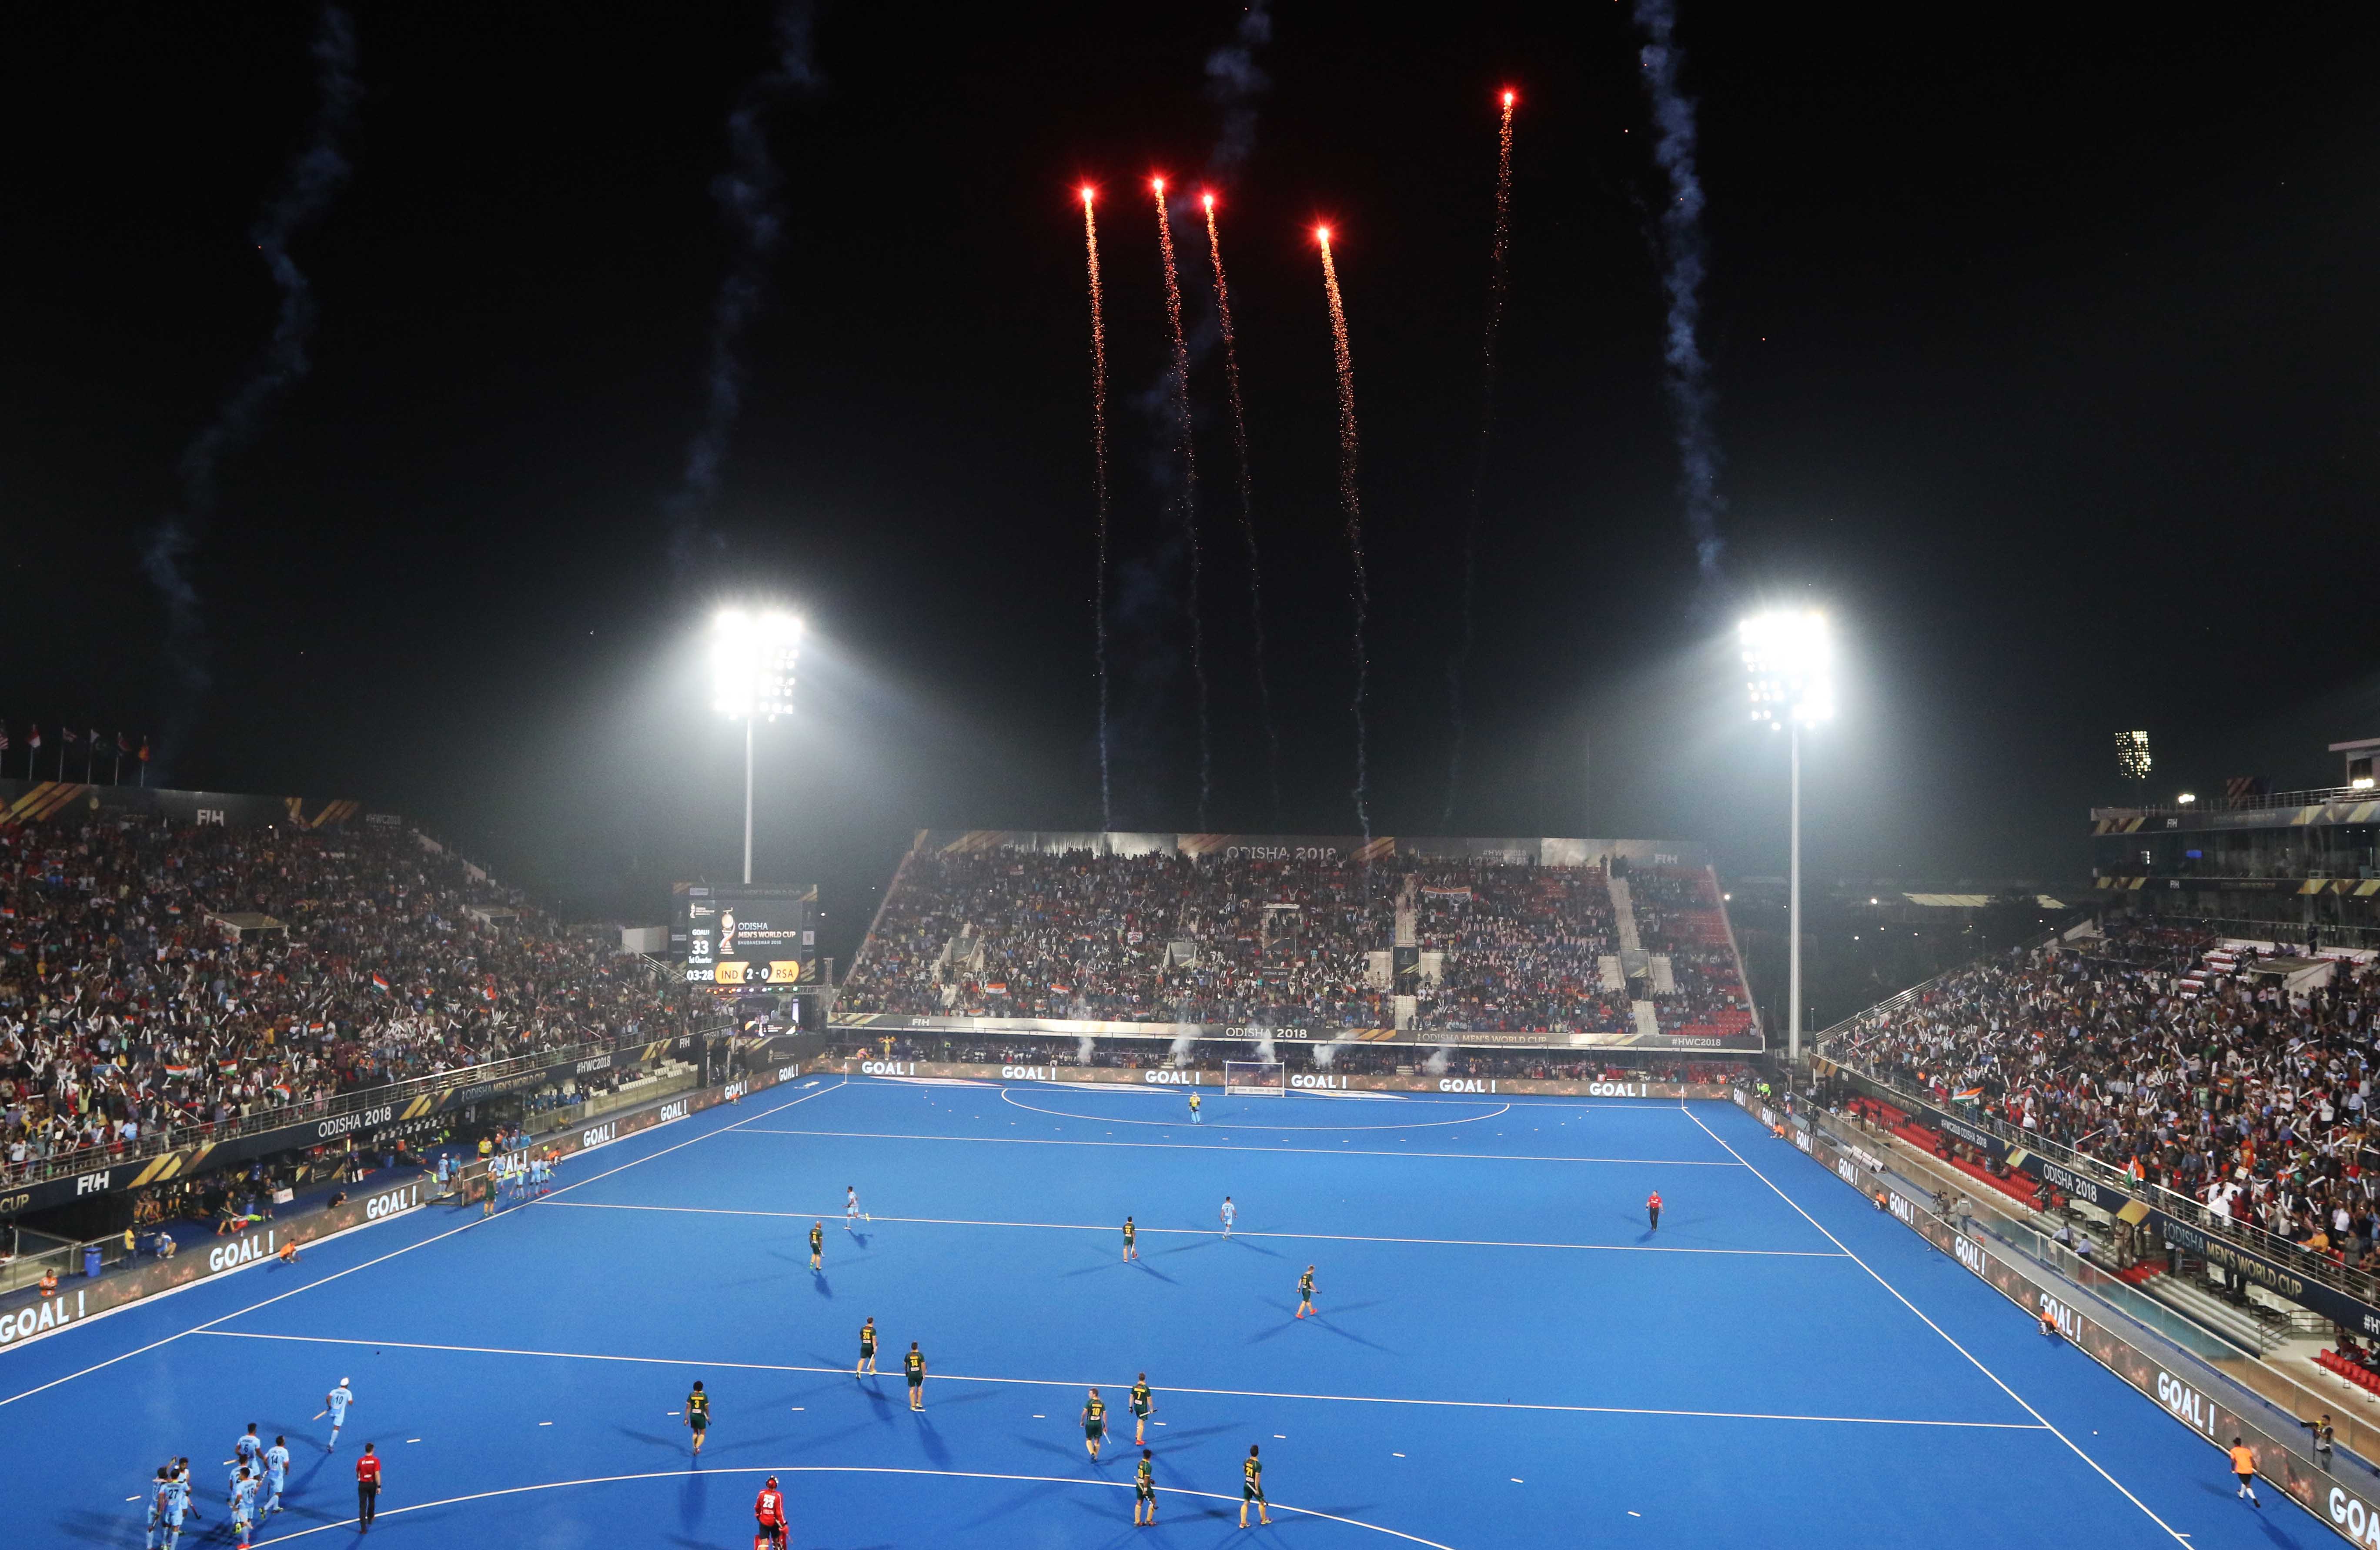 India to host 2023 Hockey World Cup, new high-performance centre at Kalinga stadium